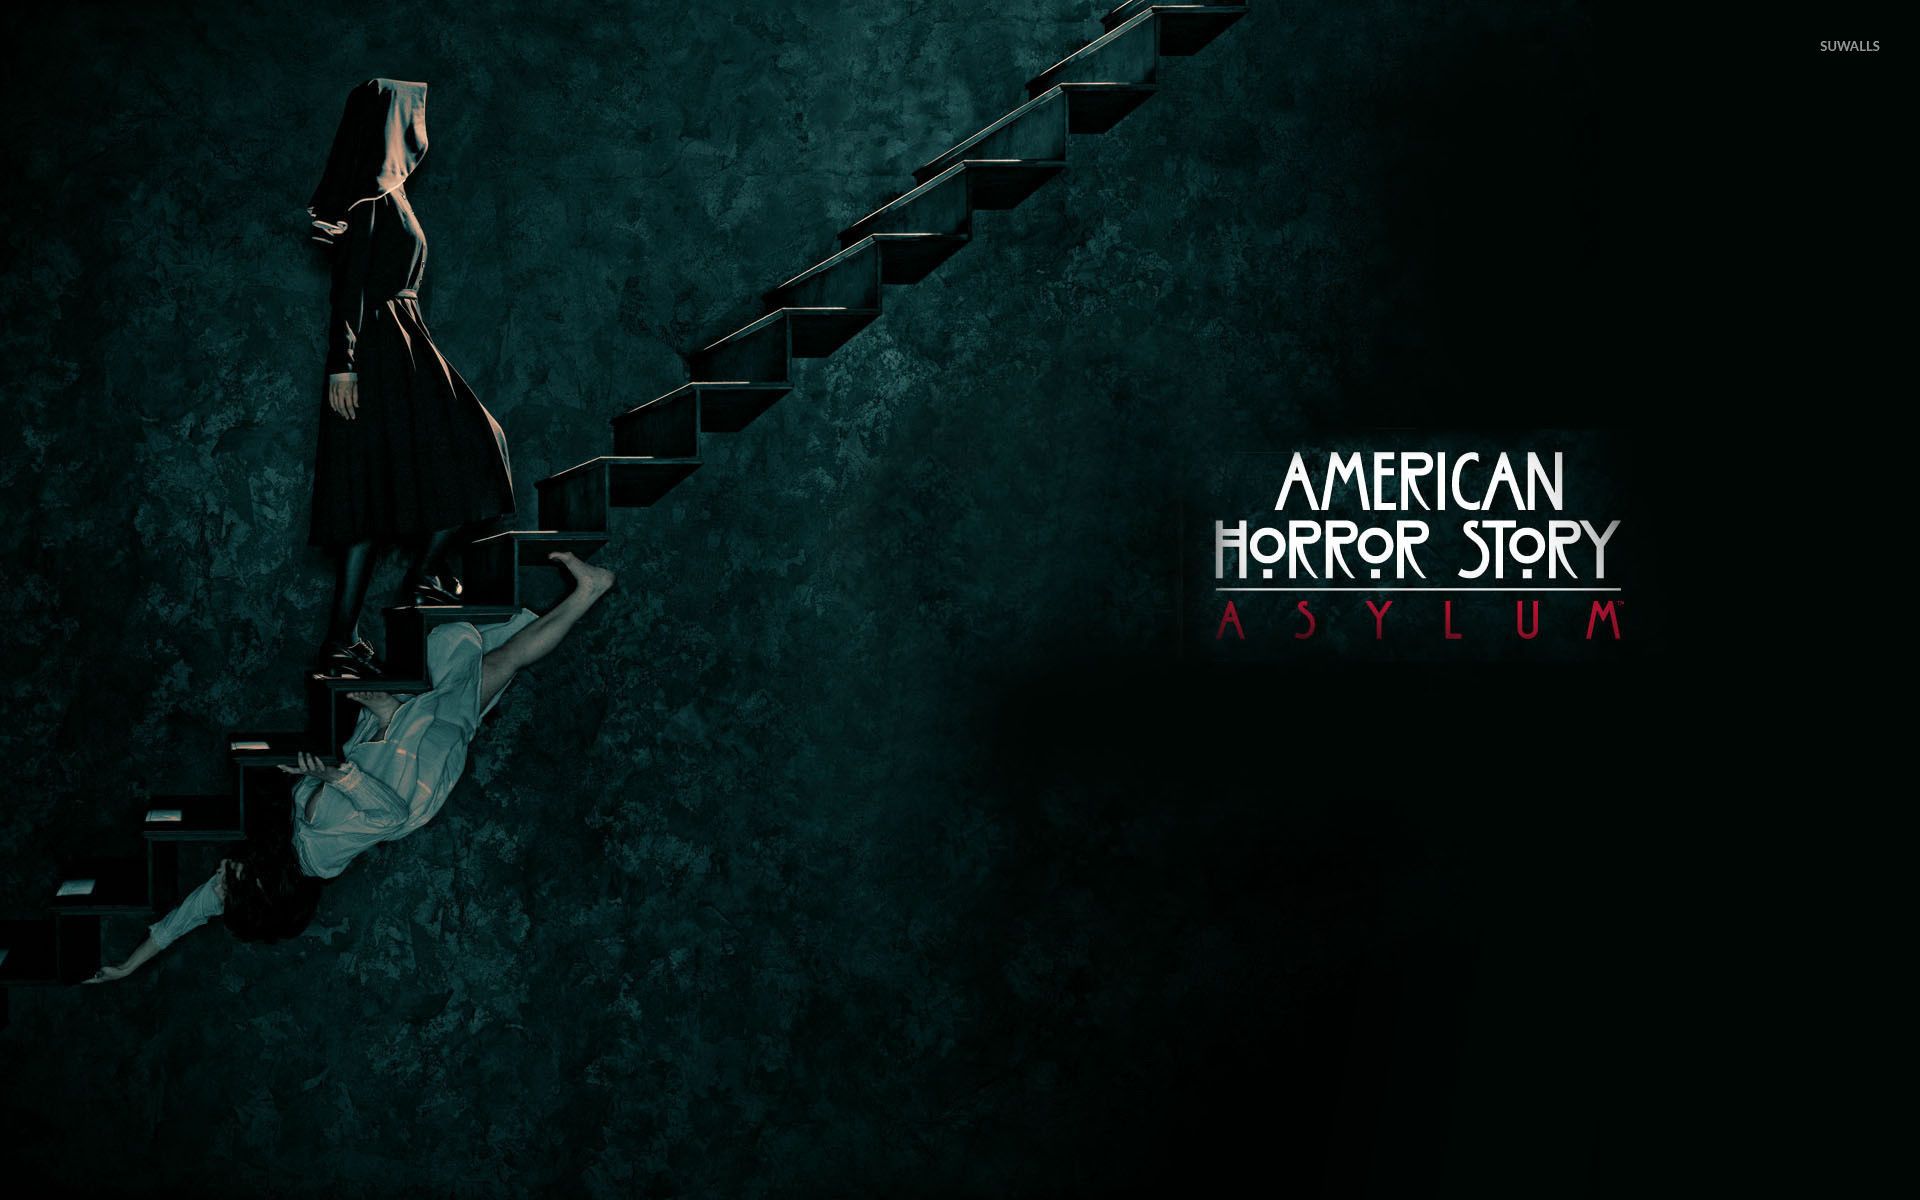 American horror story asylum poster - Horror